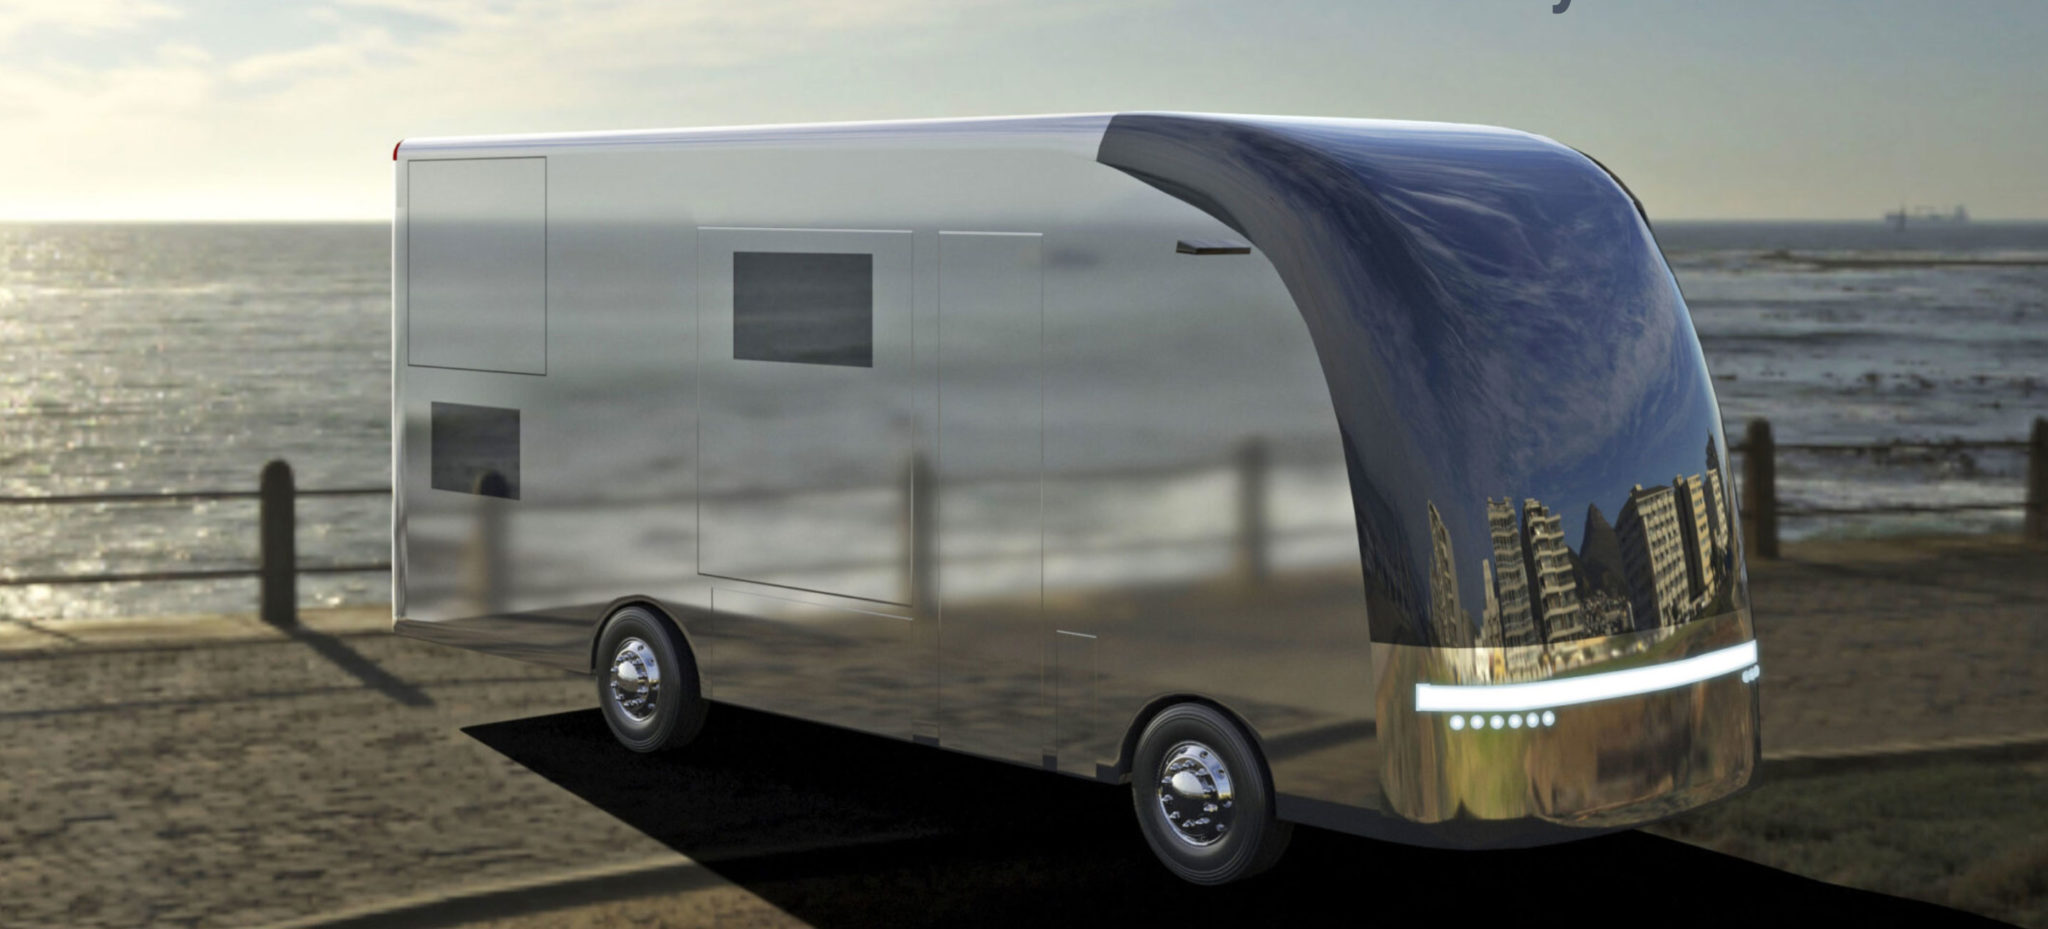 Electric Campervans 5 Best Electric Campervans for Futuristic Touring